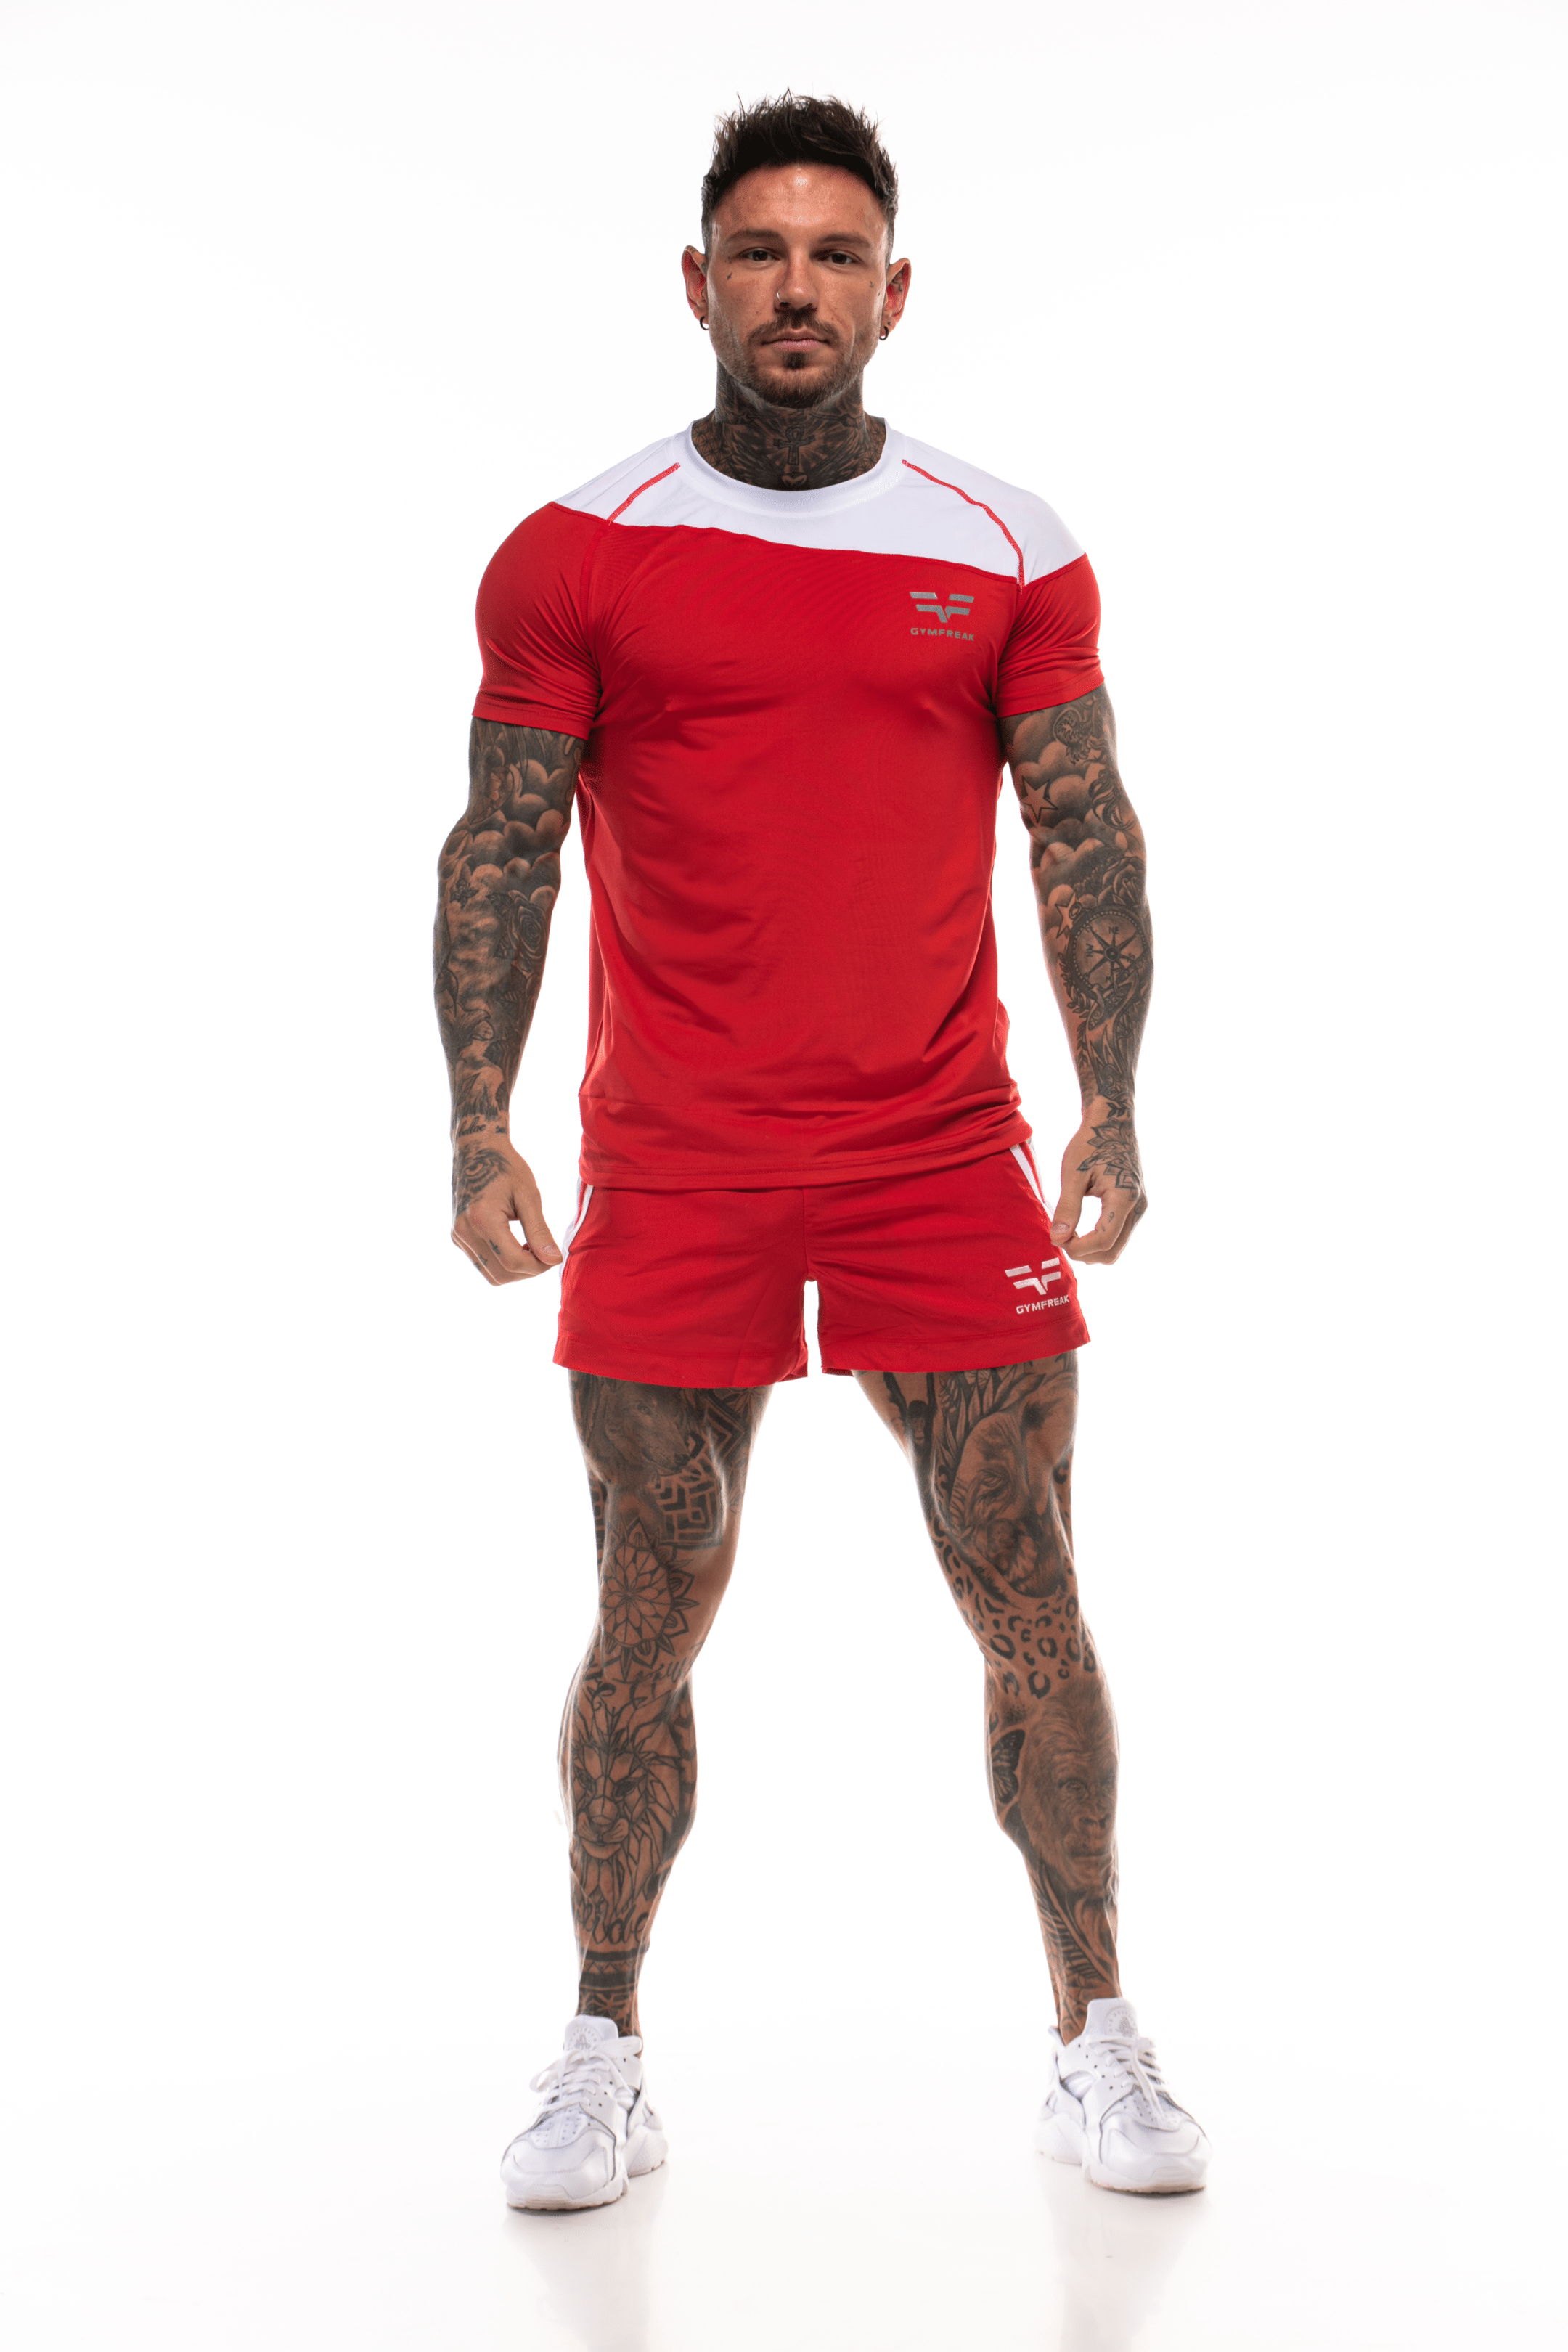 GymFreak Mens Pro Shorts - Red/white - 3.5 inch